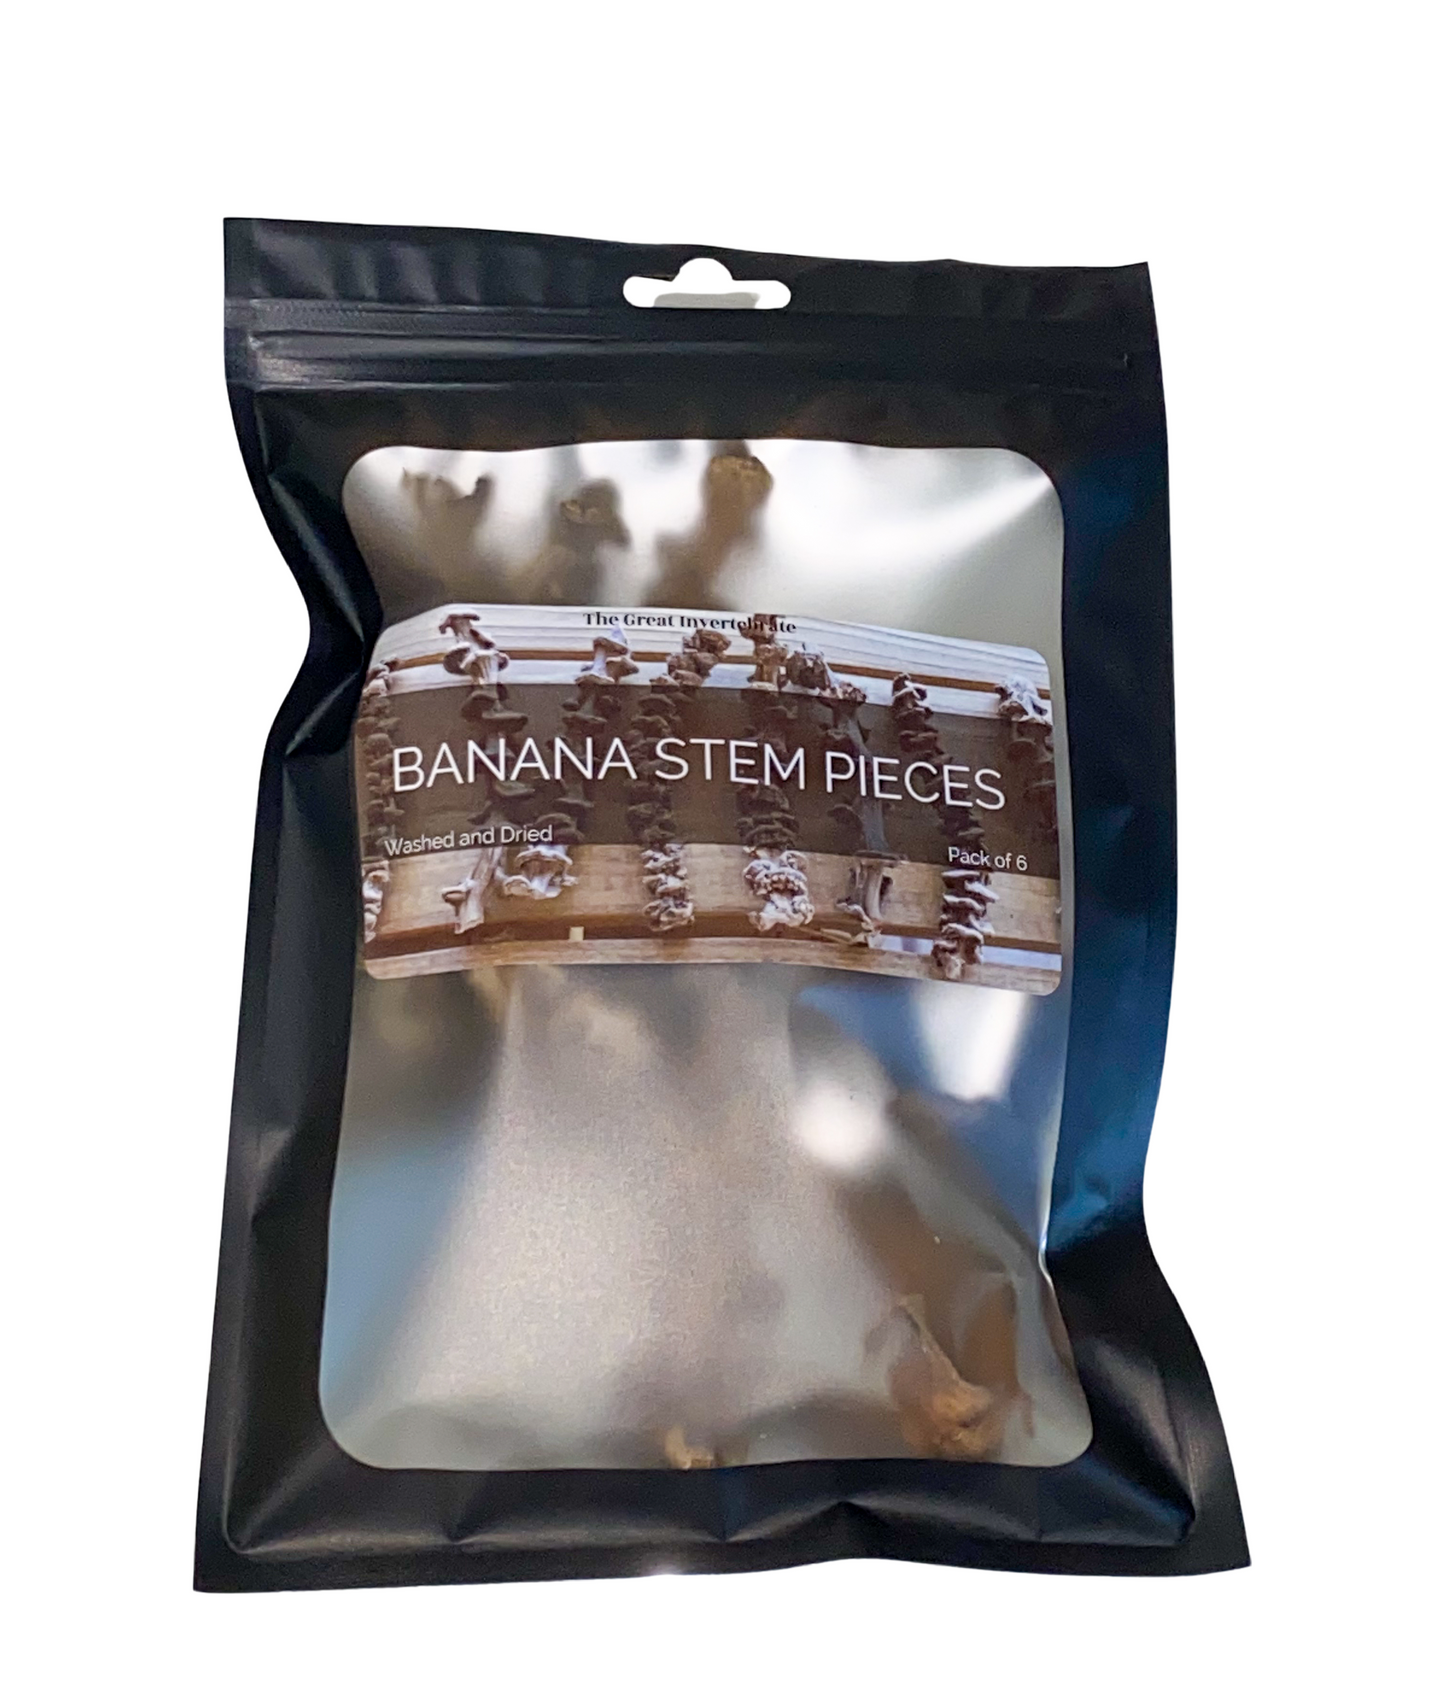 Banana Stem Pieces - Botanical Additive for Terrariums, Vivariums and Freshwater Fish Tanks.